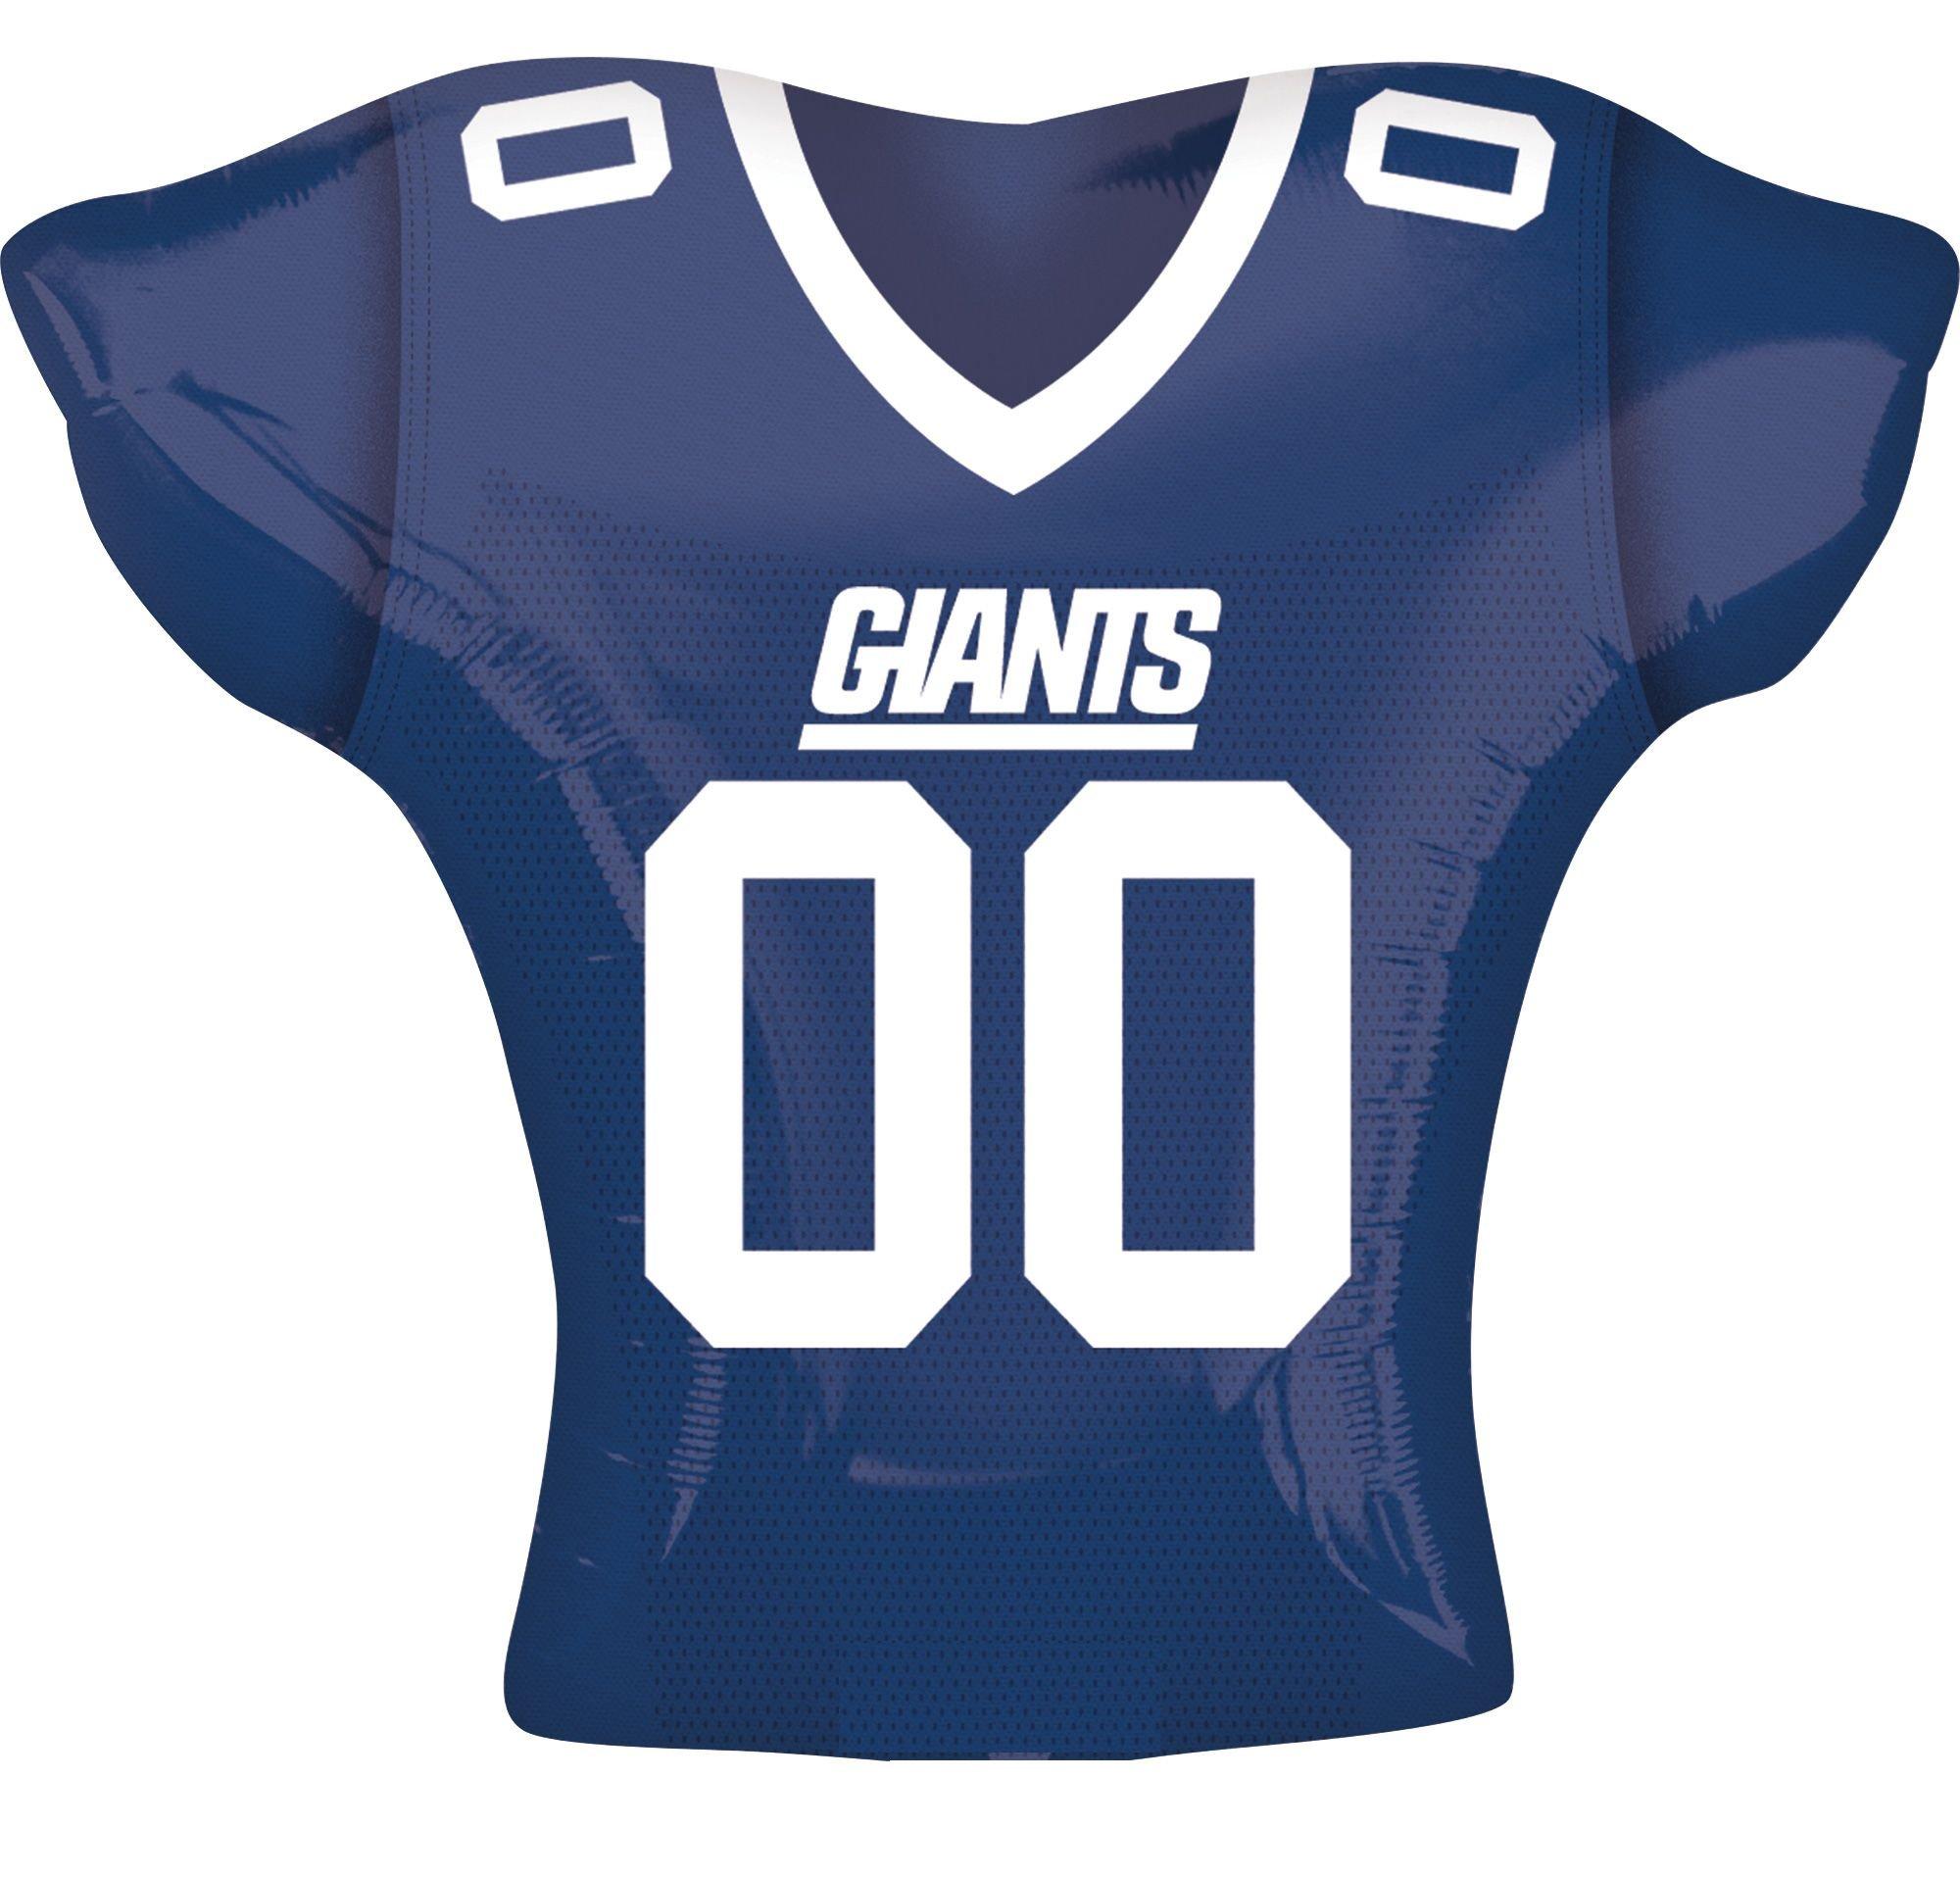 New York Giants Apparel, New York Giants Merchandise, NY Giants Gear